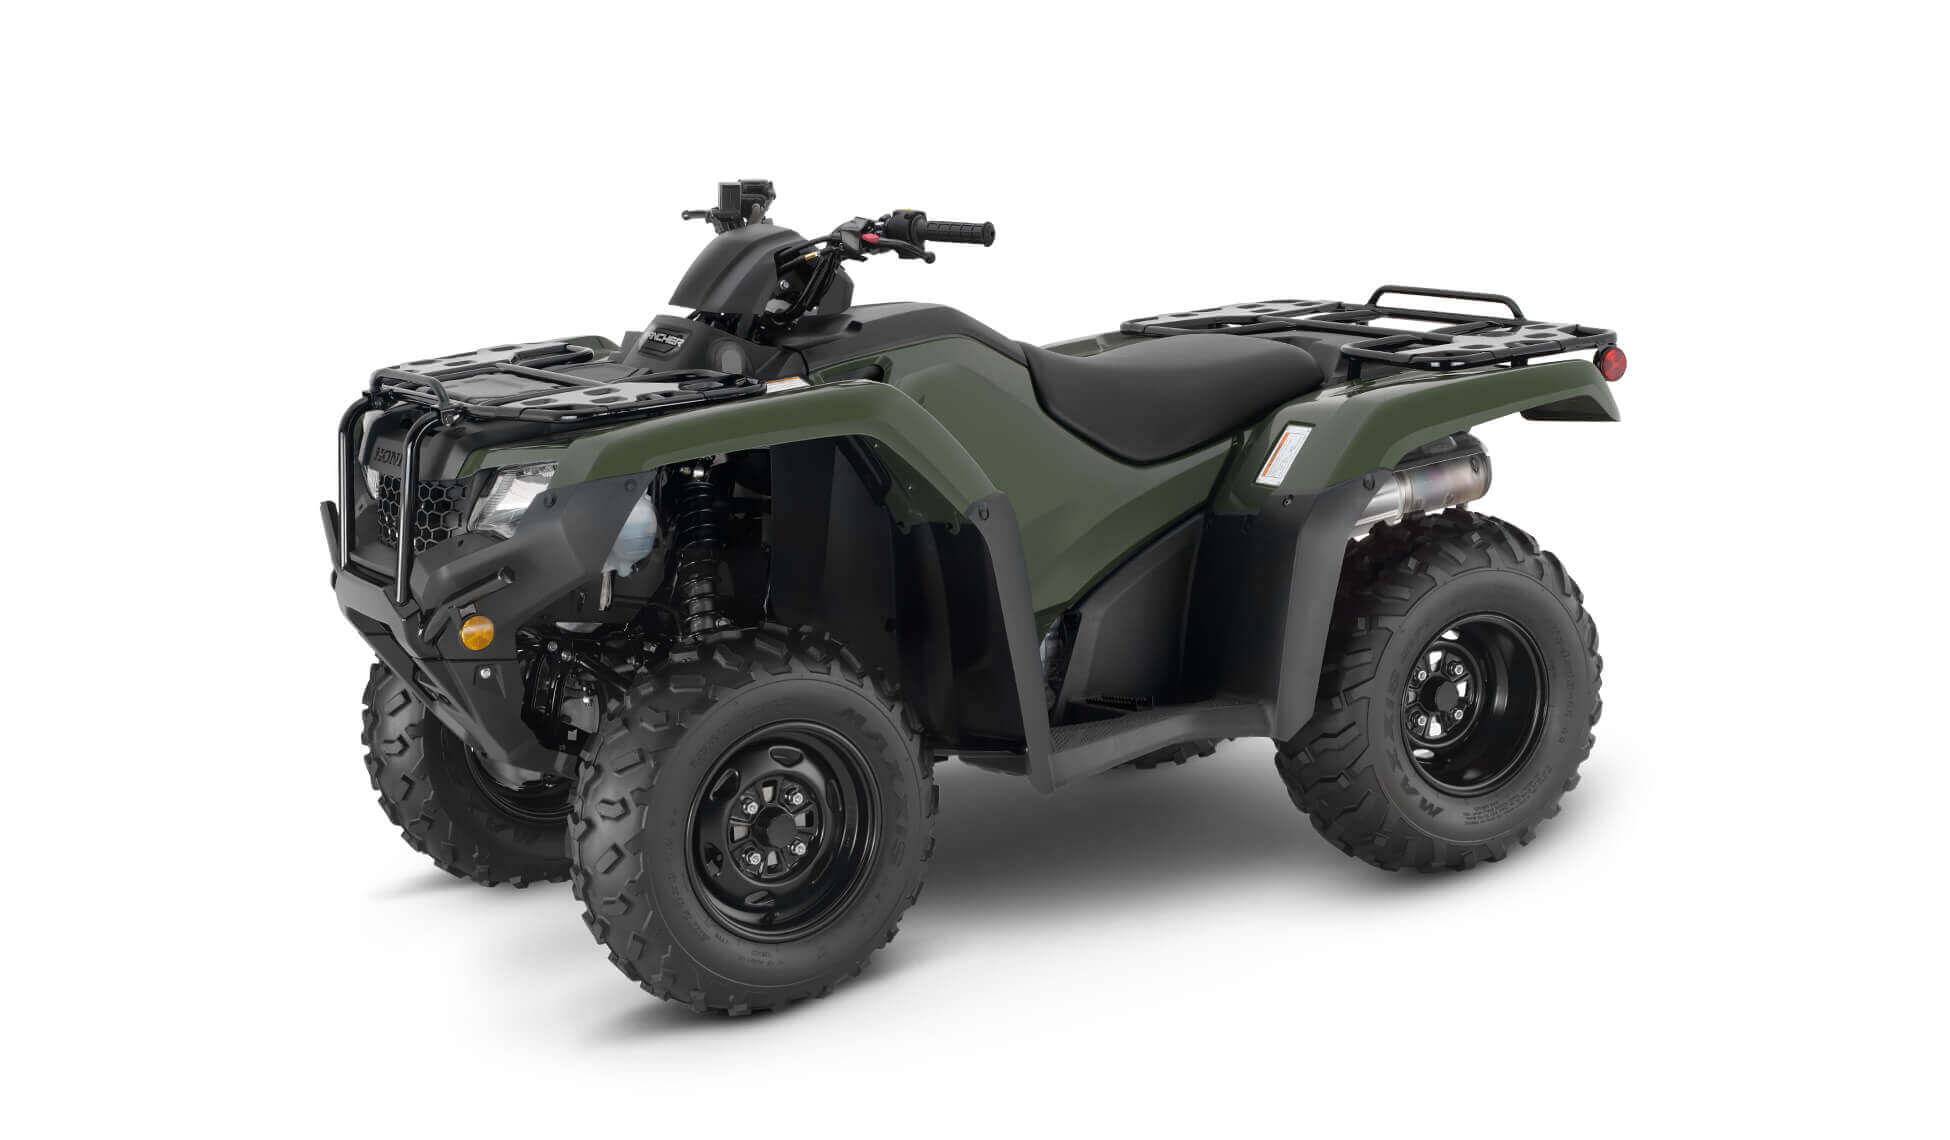 2021 Honda Rancher 420 EPS 4x4 ATV | TRX420FM2 Review & Specs